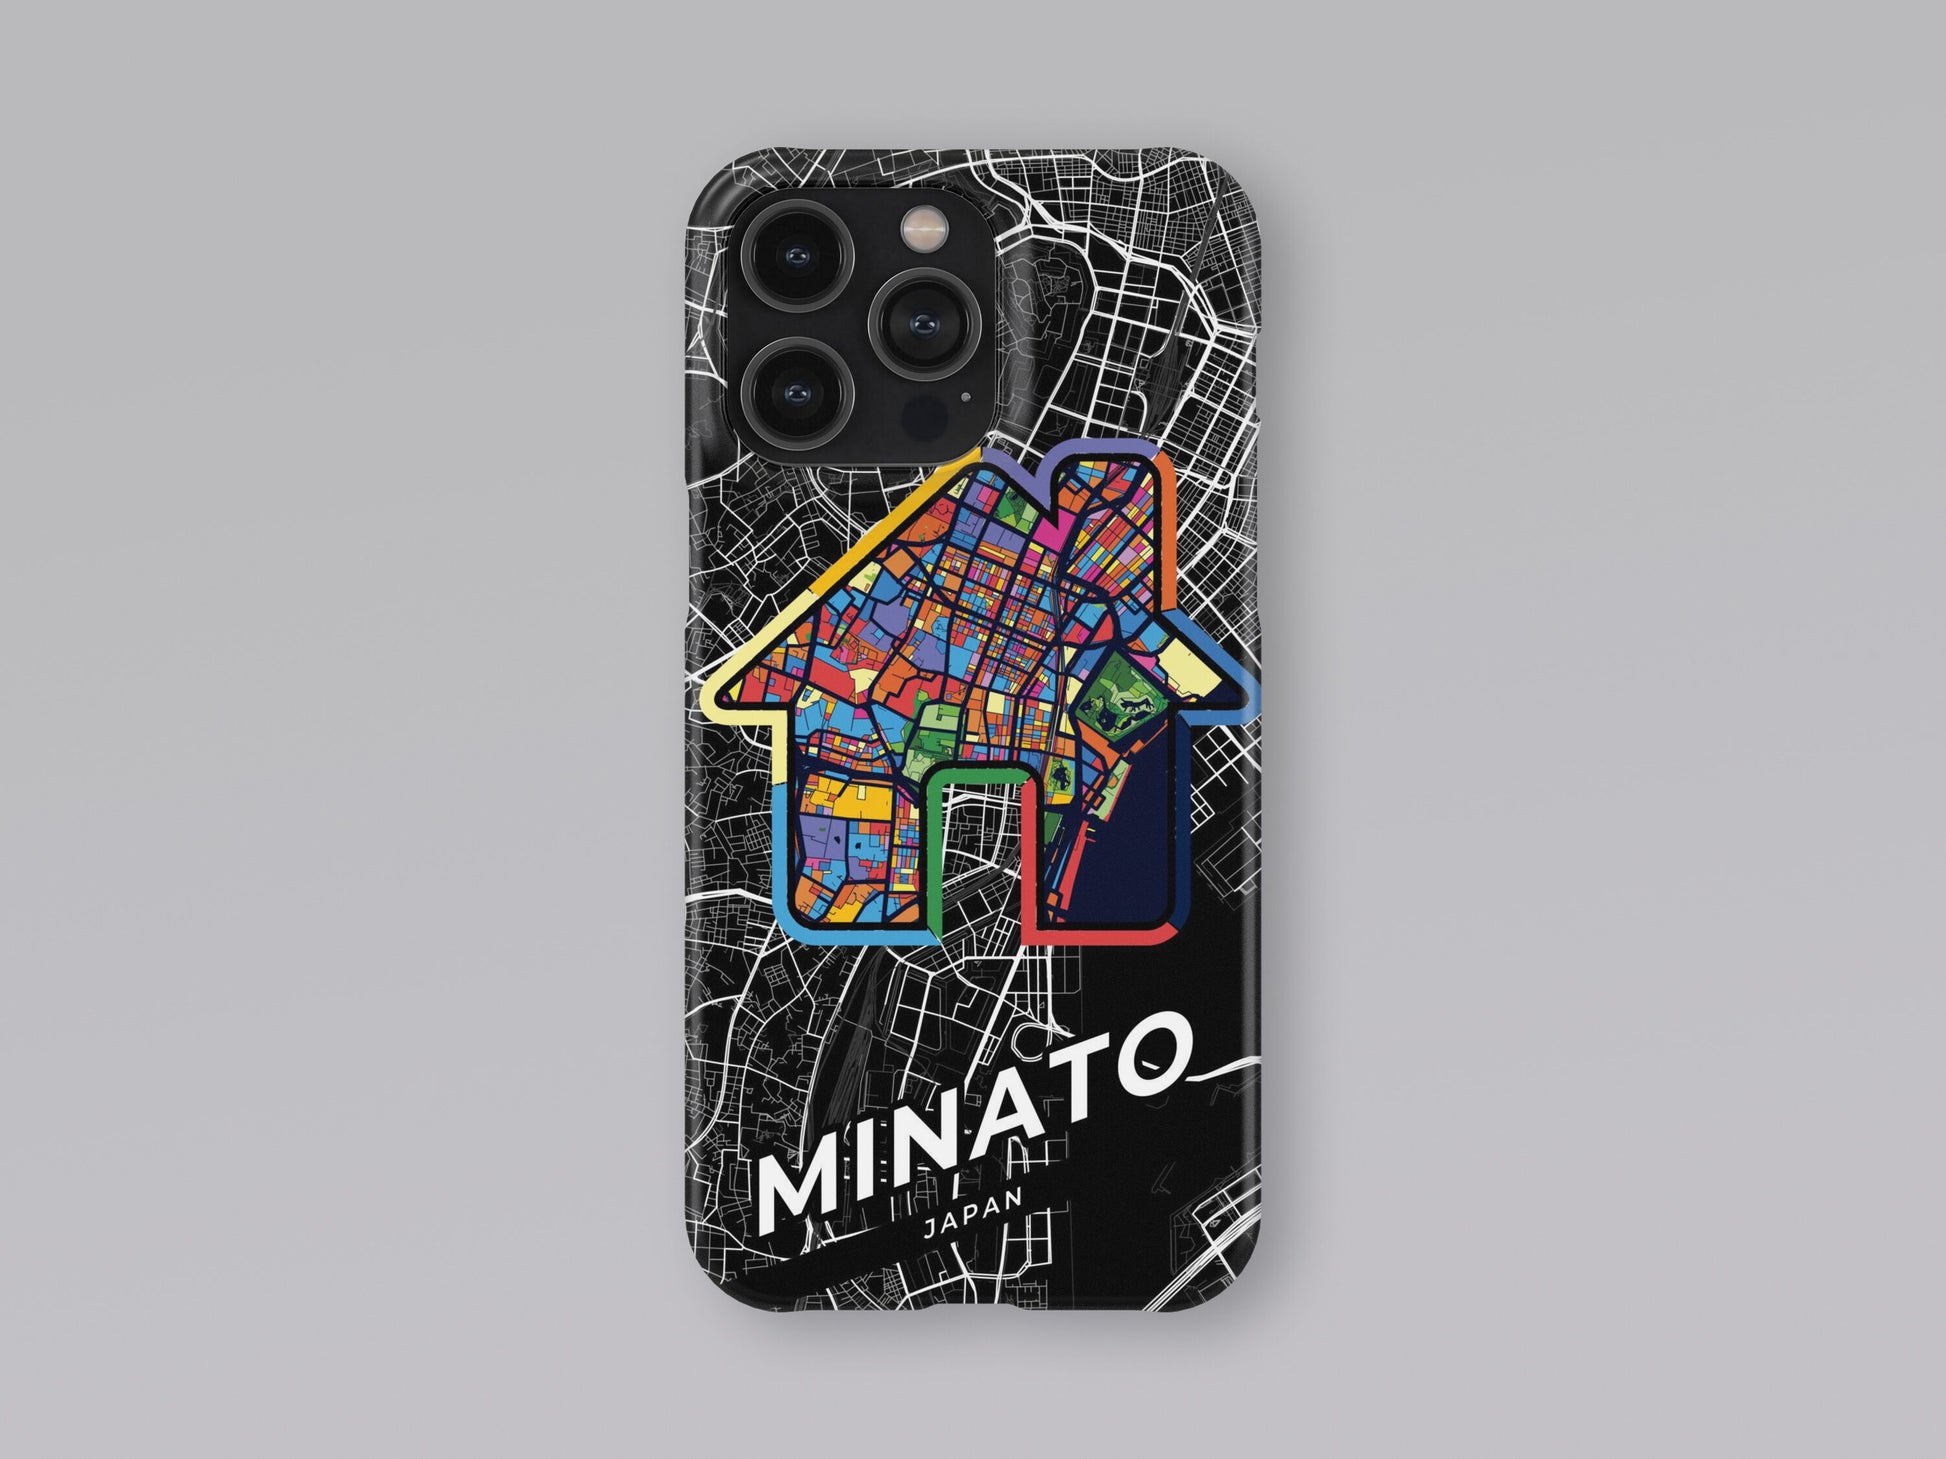 Minato Japan slim phone case with colorful icon 3